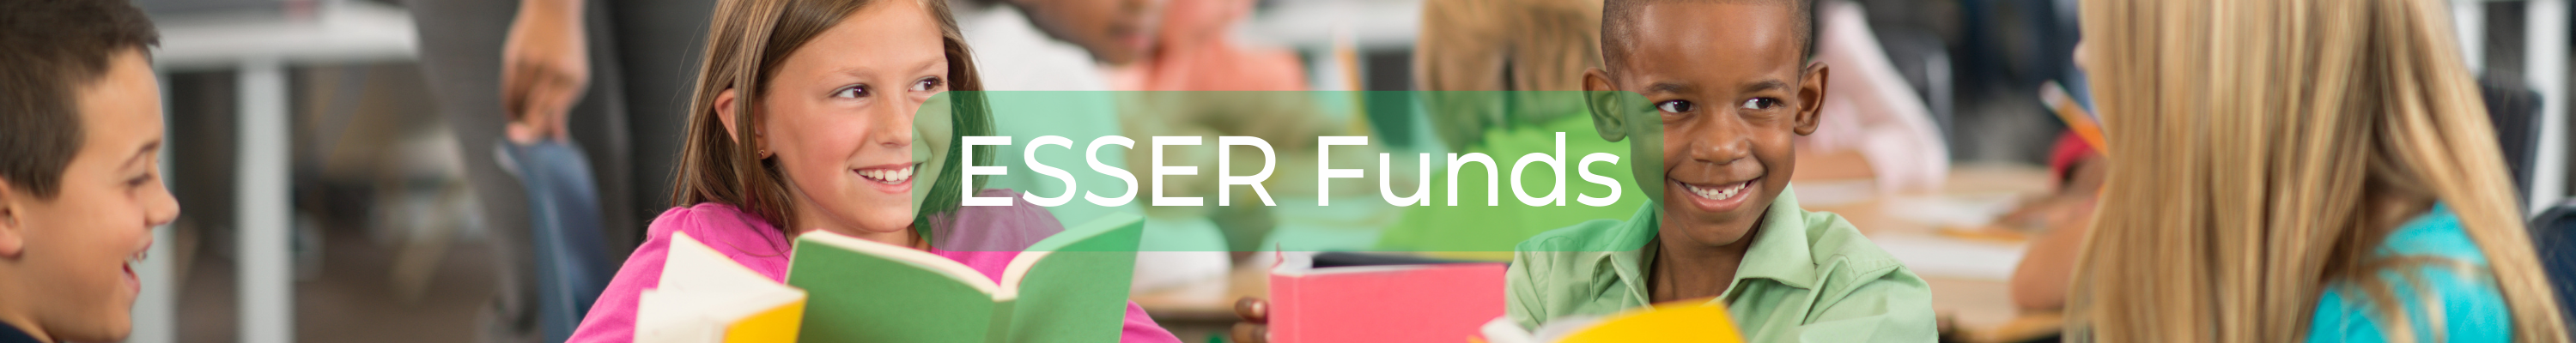 ESSER Funds Banner (1)